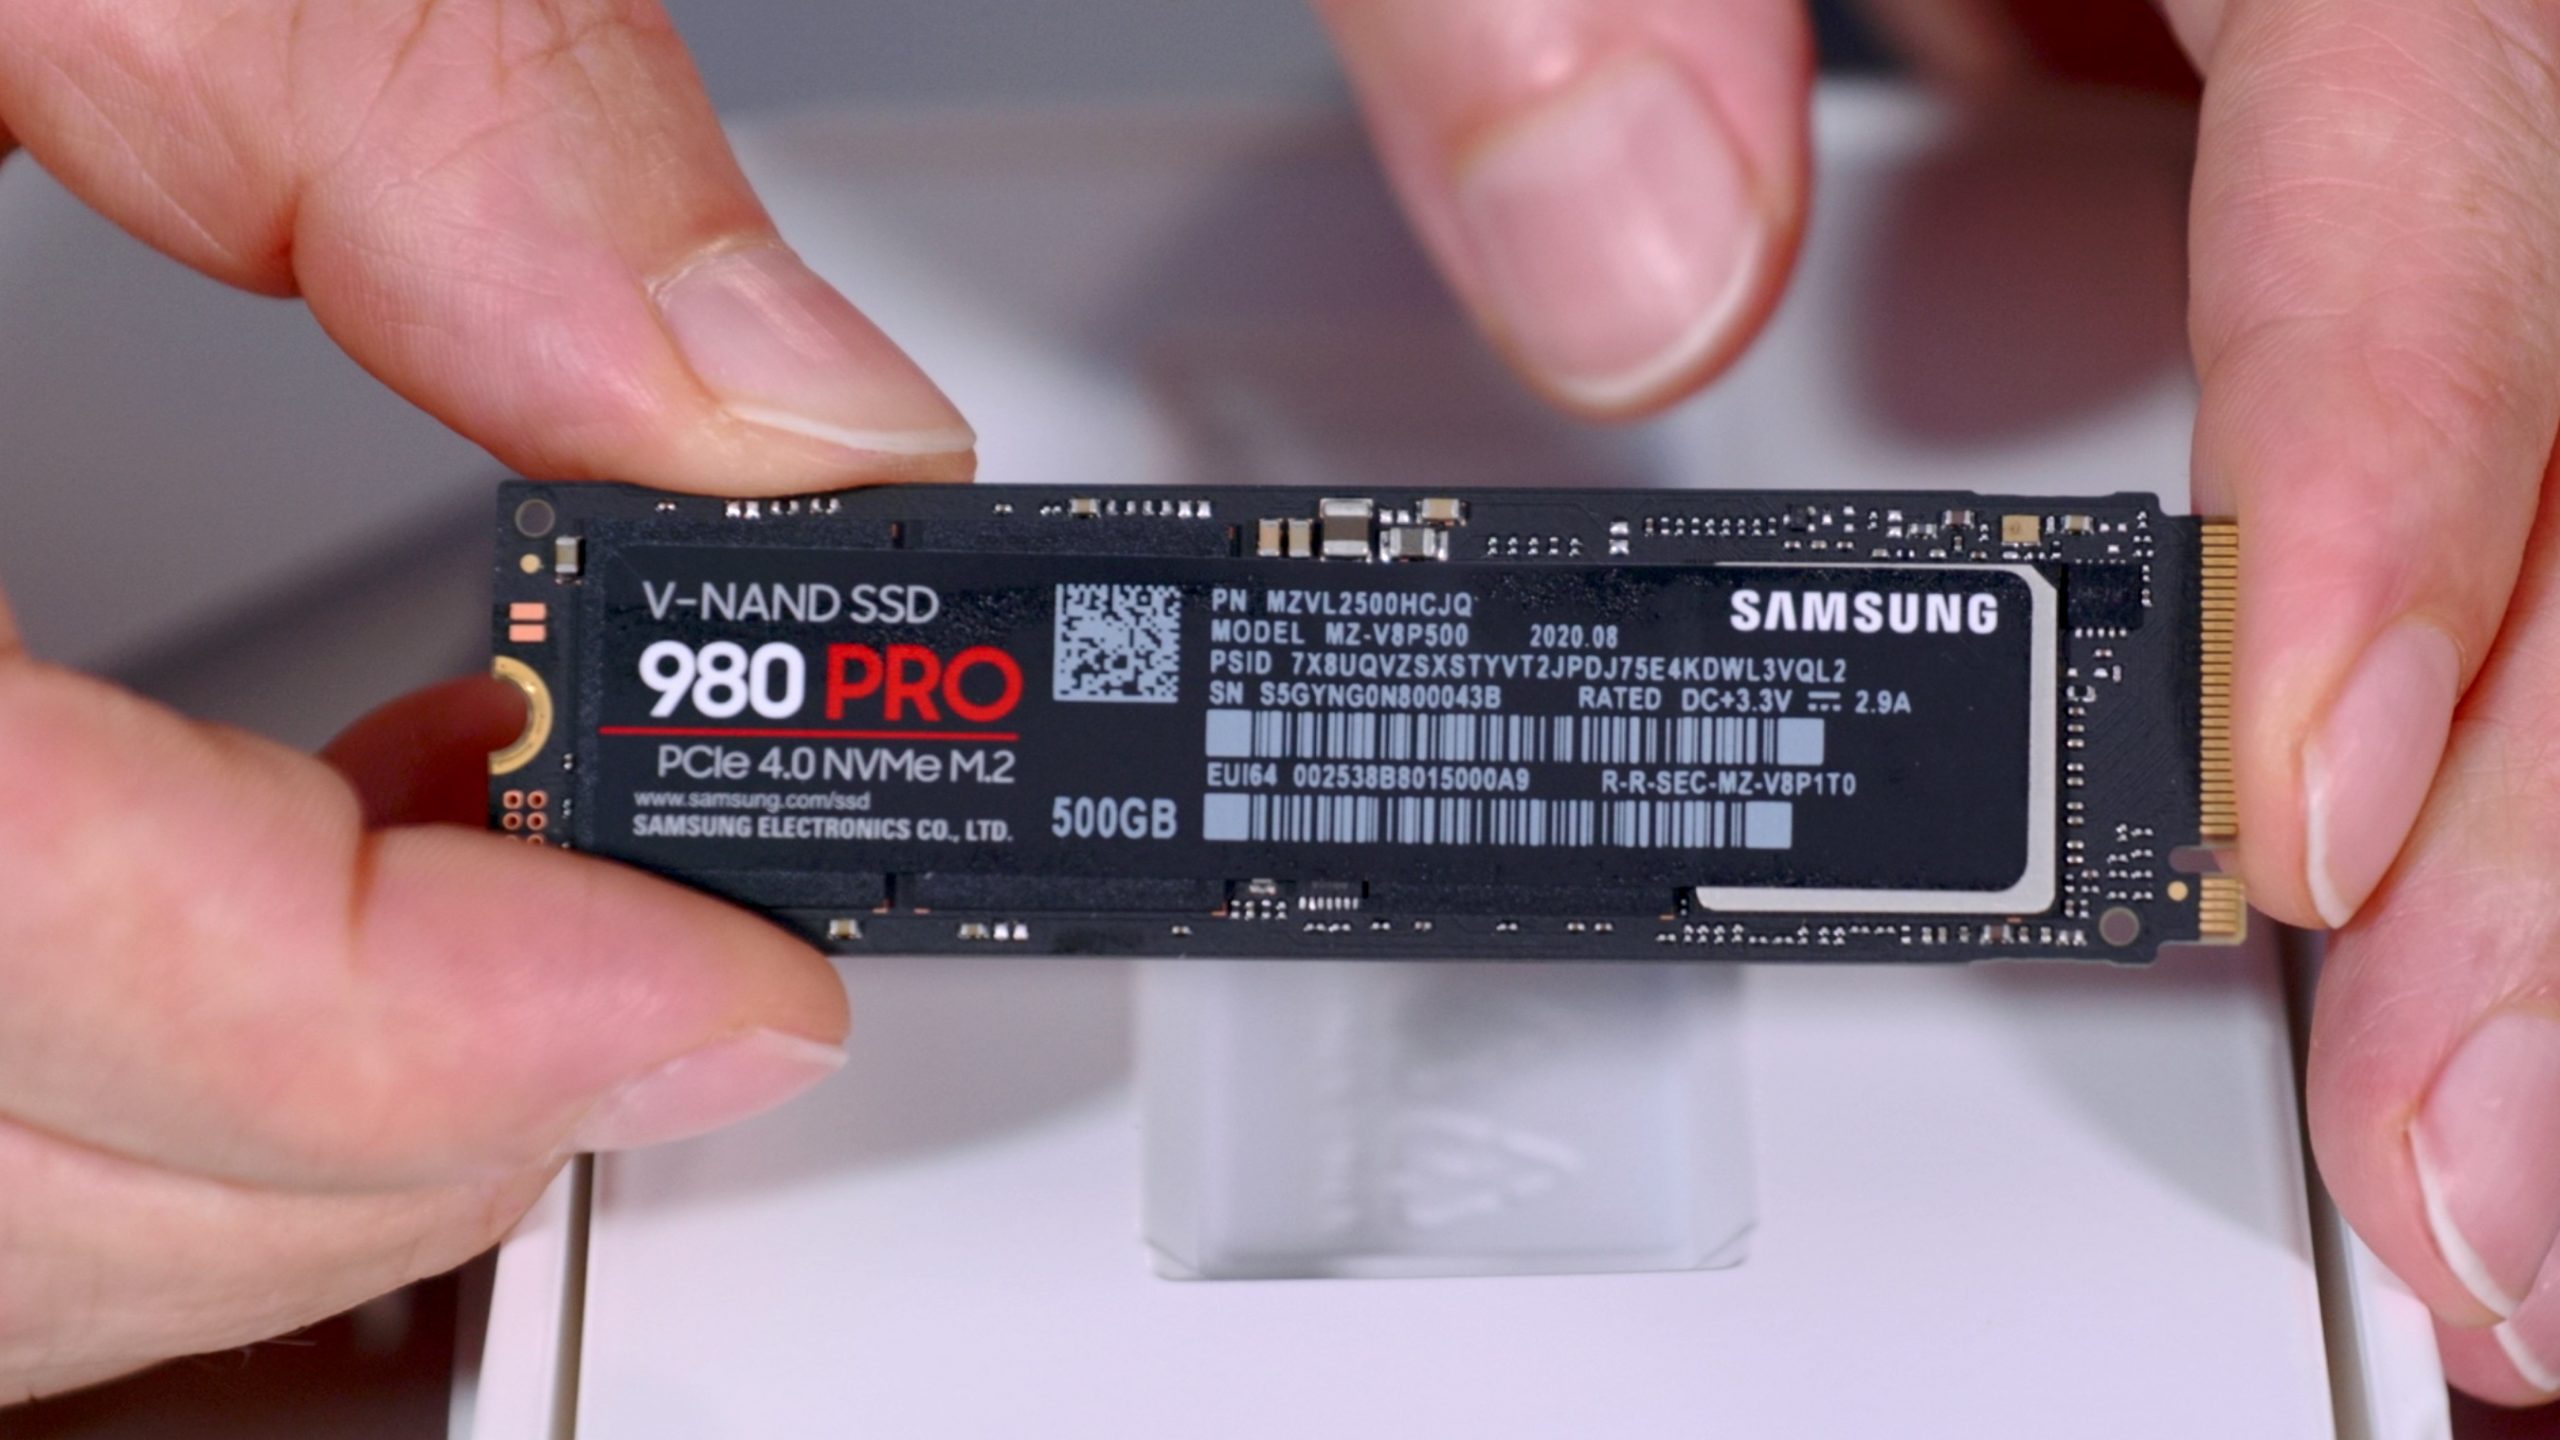 Samsung 980 Pro PCI Express 4.0 NVMe SSD İncelemesi - Technopat